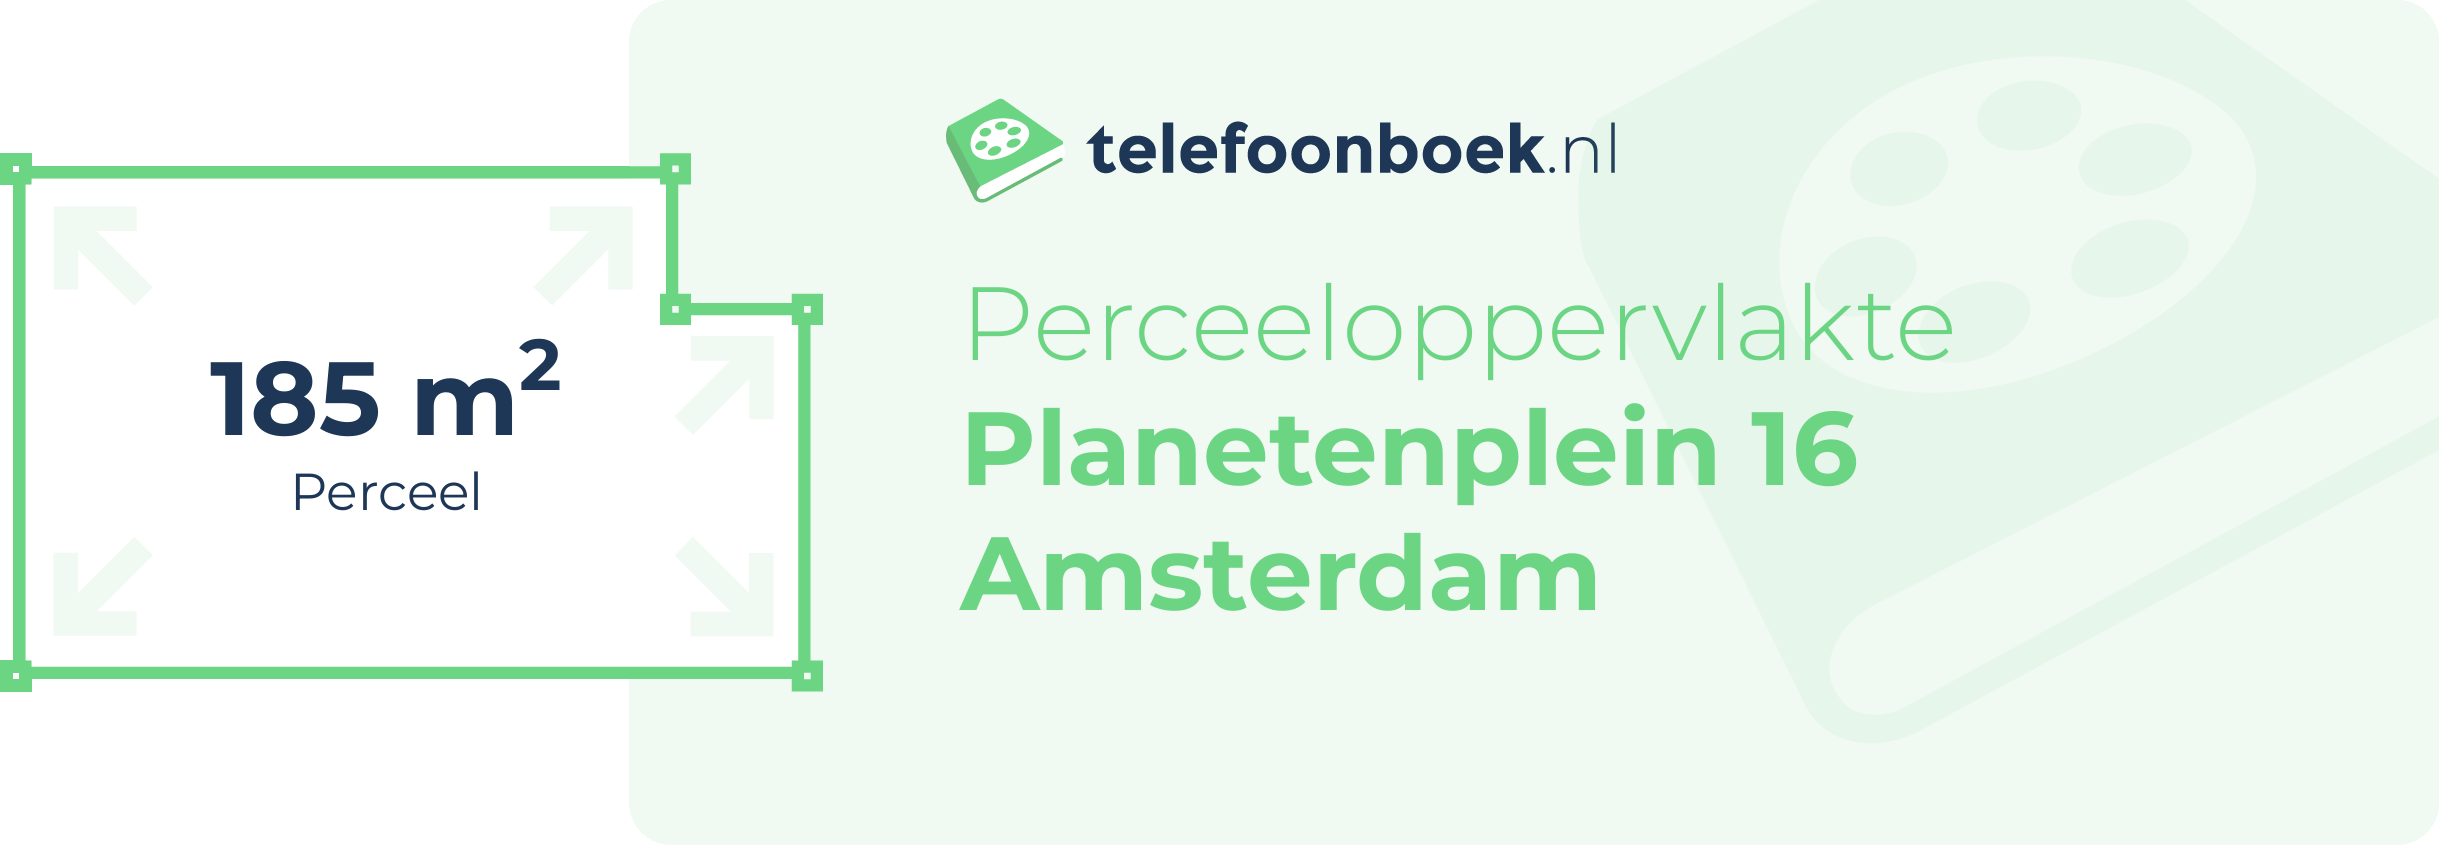 Perceeloppervlakte Planetenplein 16 Amsterdam